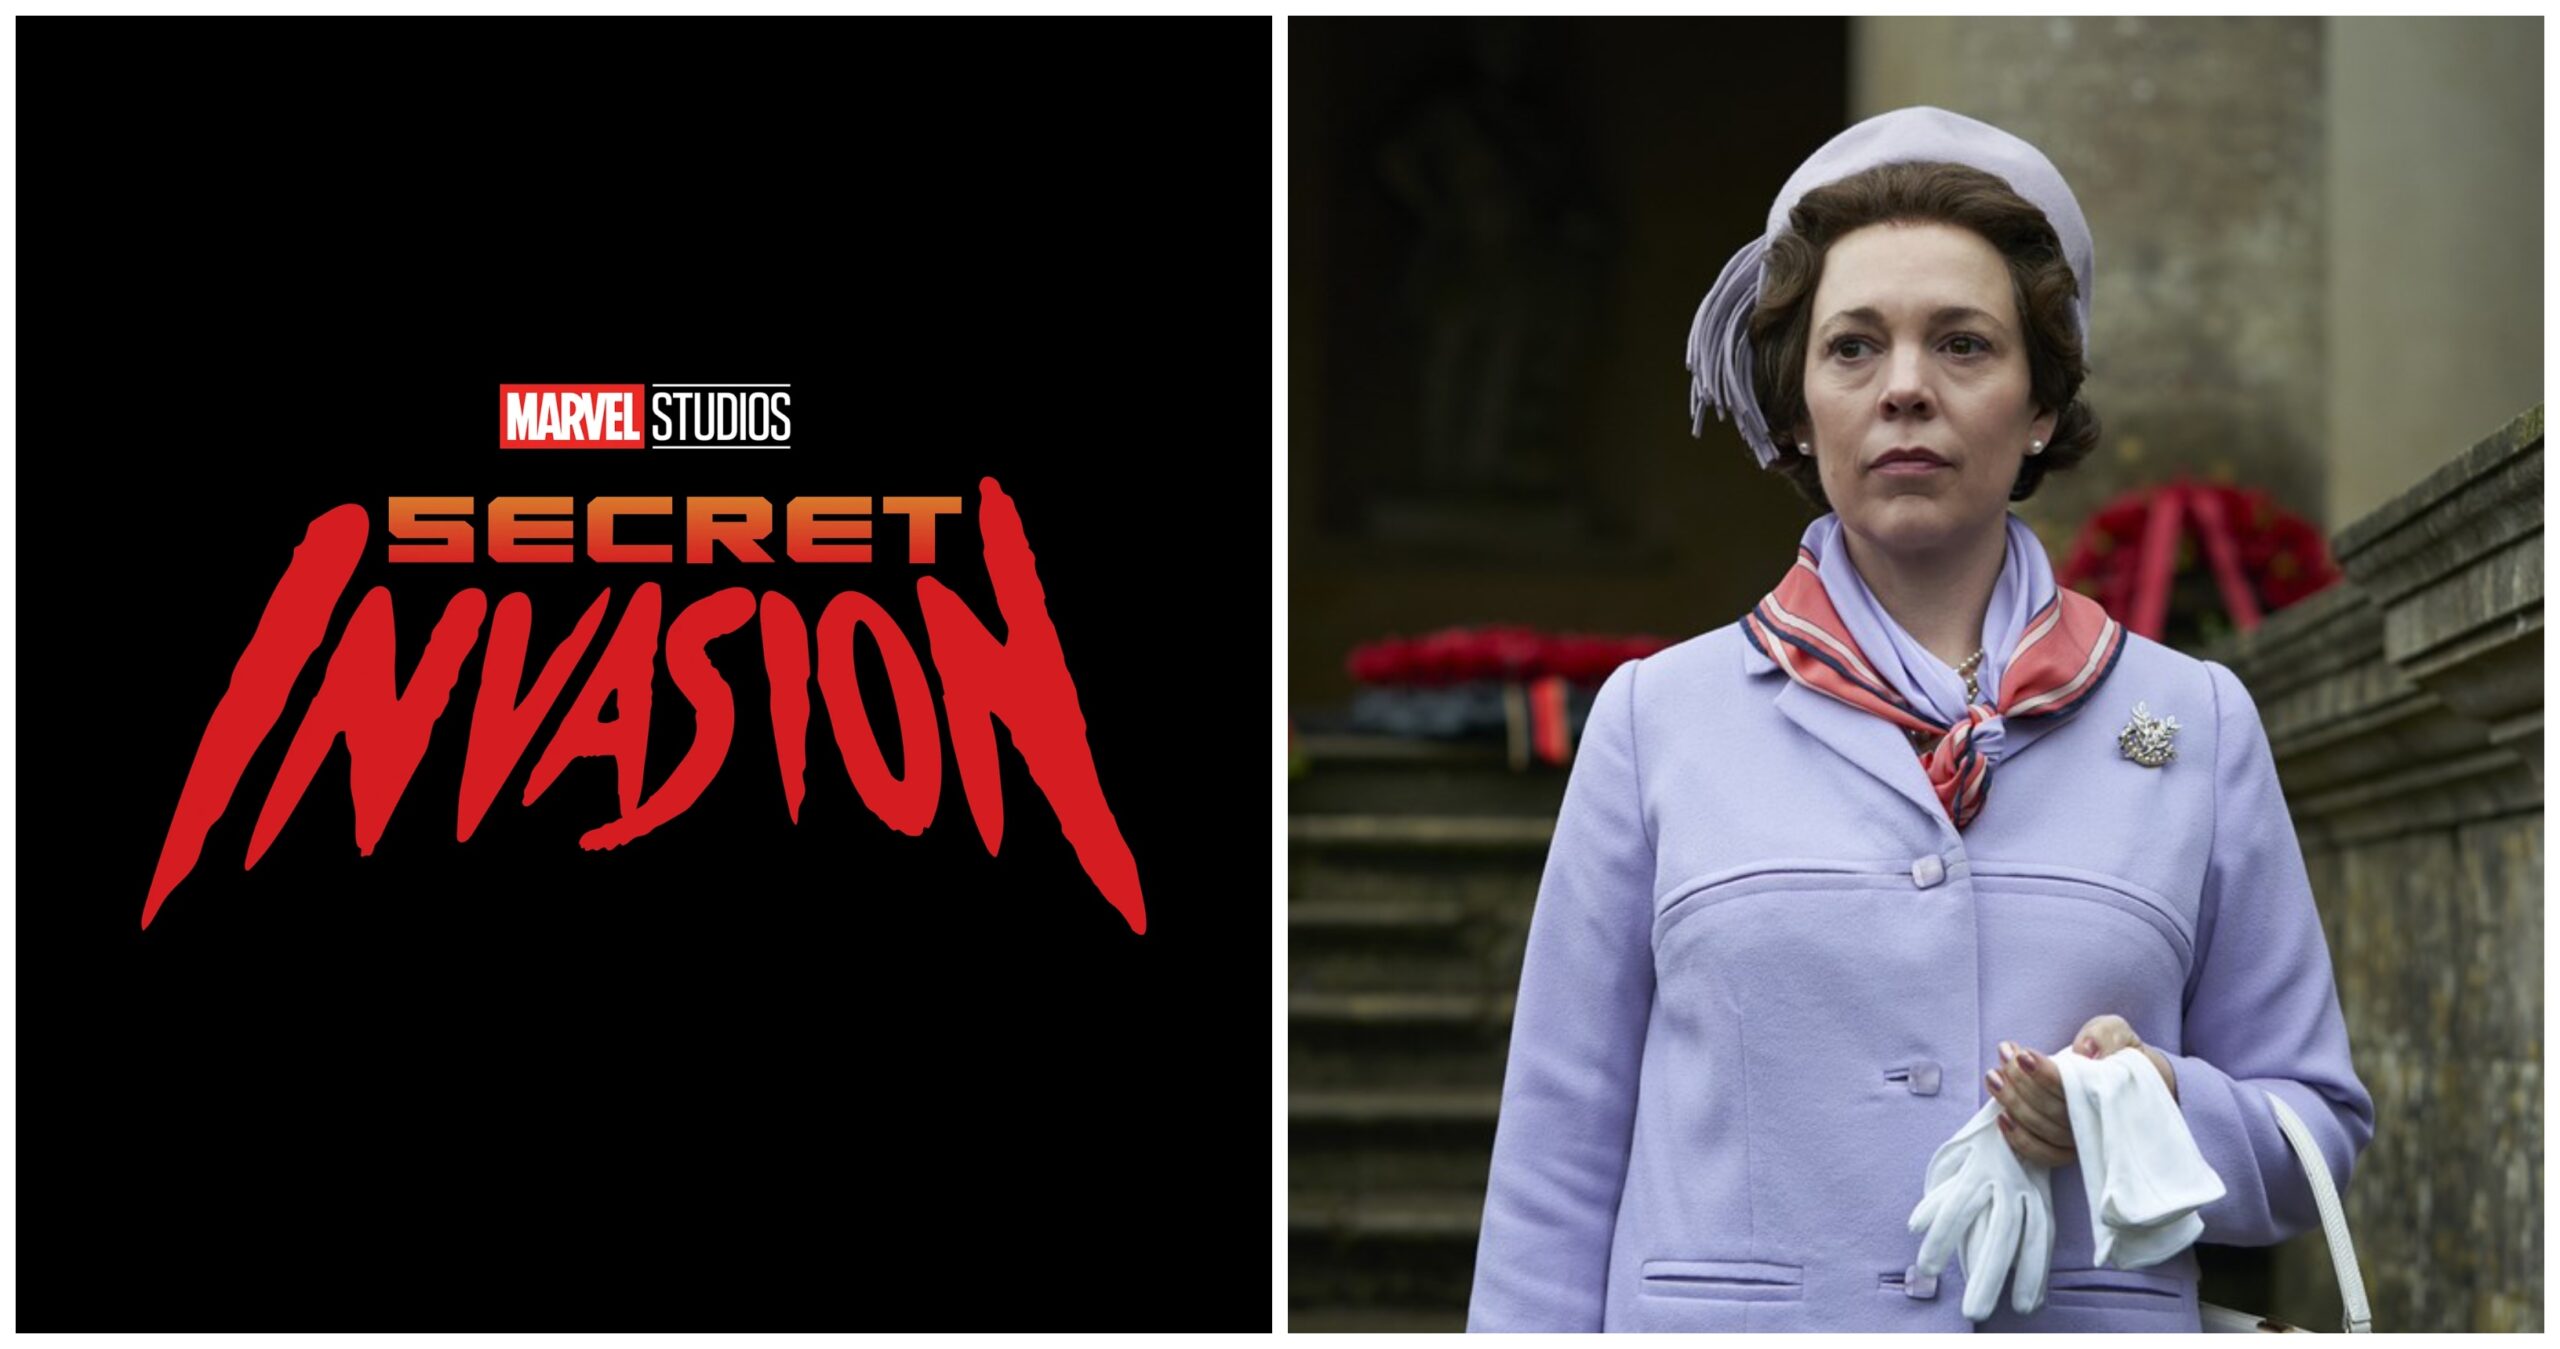 Marvel Studios Secret Invasion logo (left) and Olivia Colman in The Crown (right)